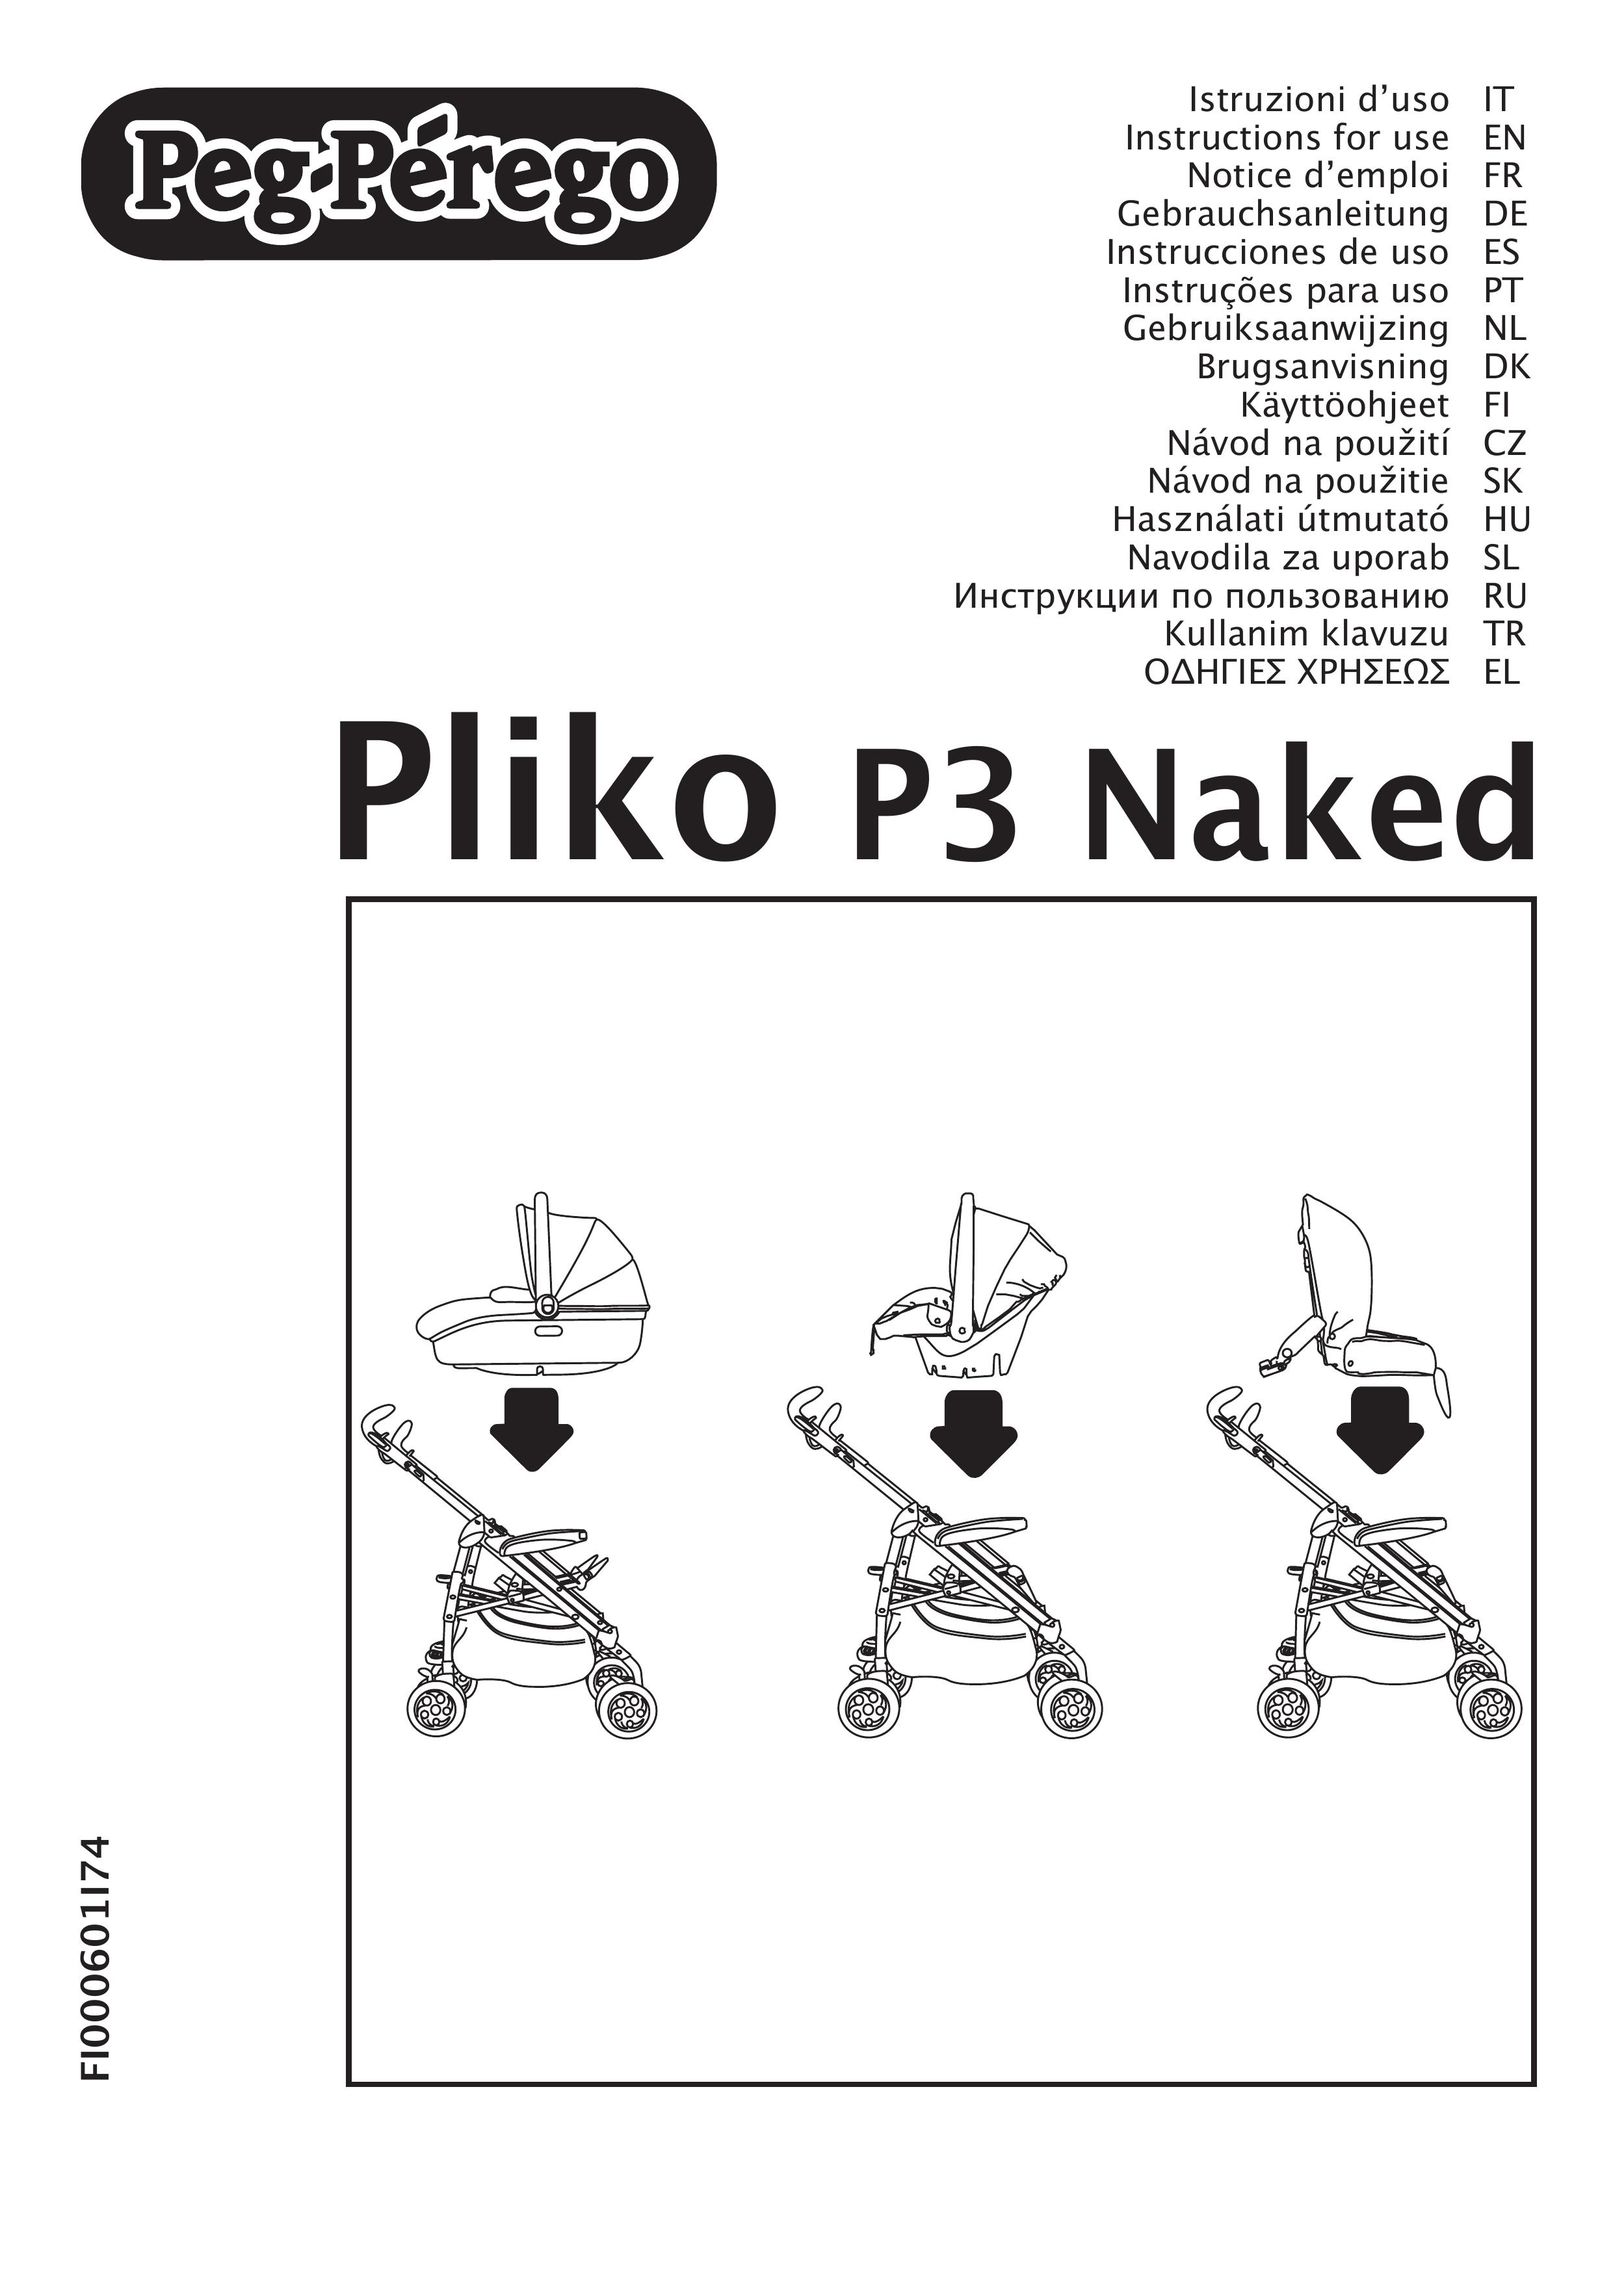 Peg-Perego Pliko P3 Naked Stroller User Manual